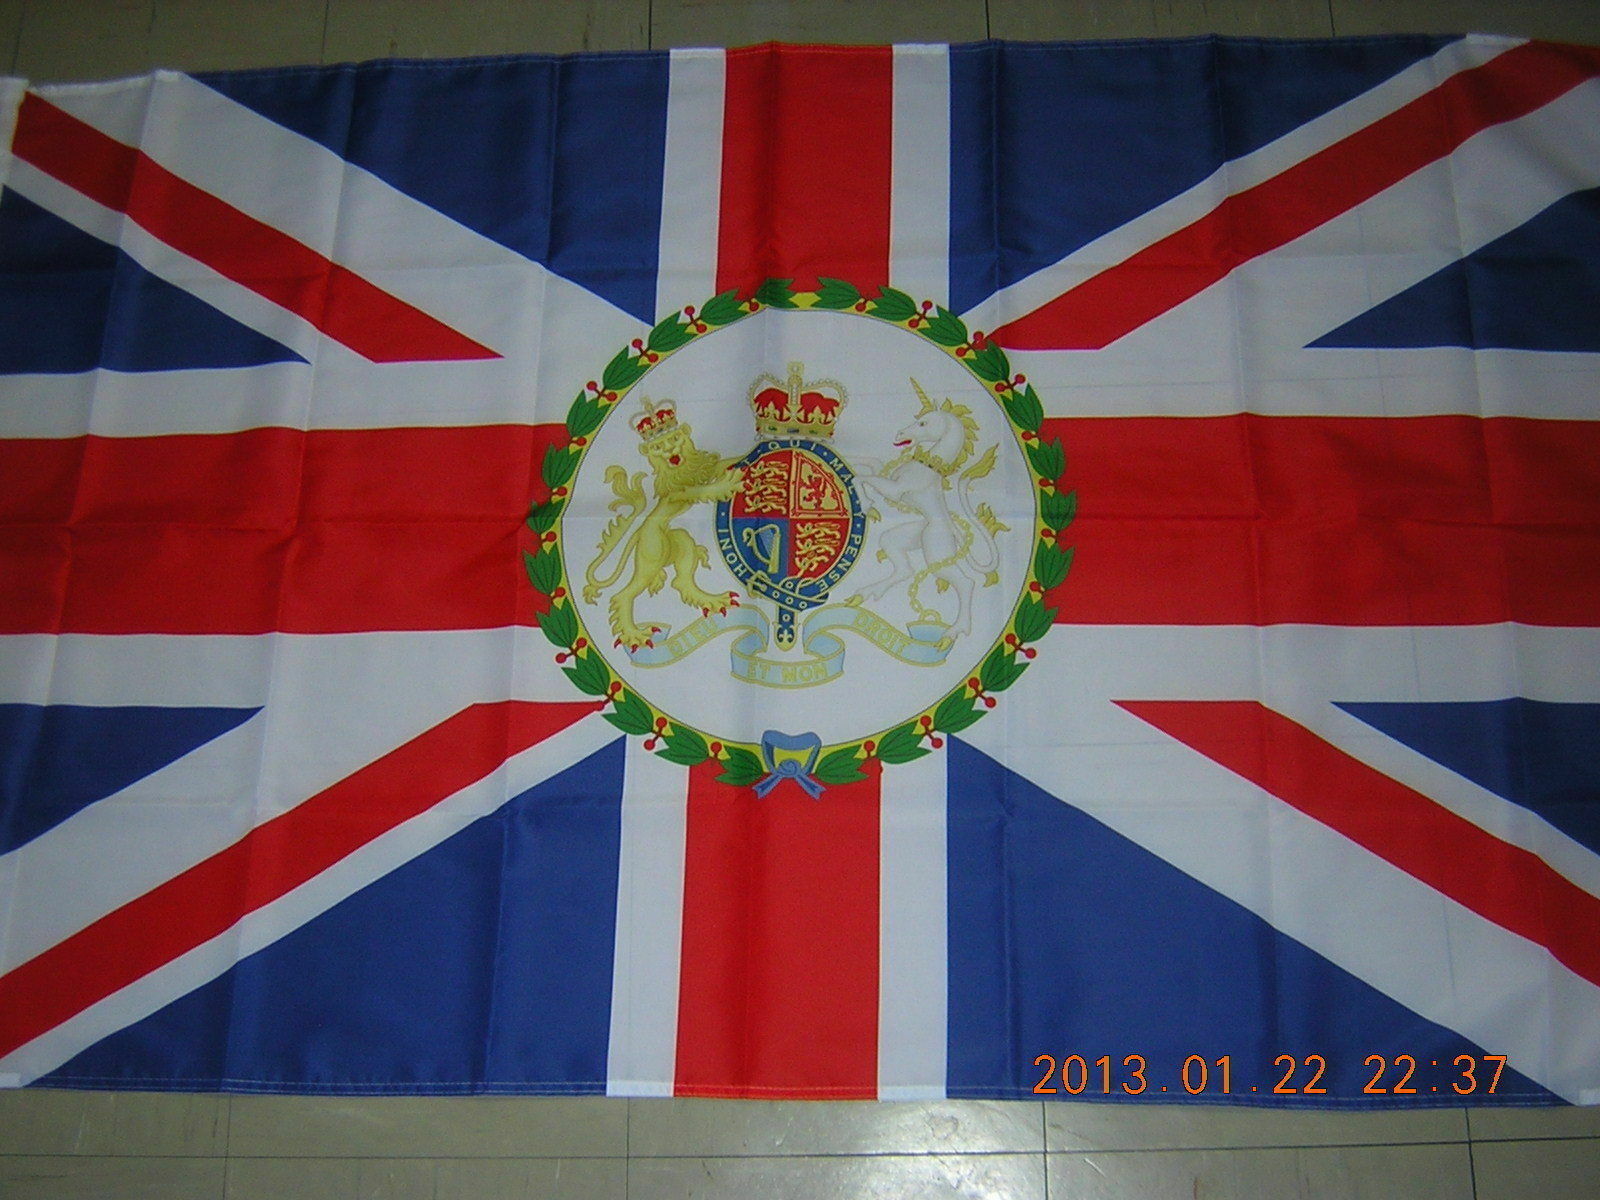 British Empire Flag Of The British Ambassador Diplomatic Union Jack Ensign 3x5ft